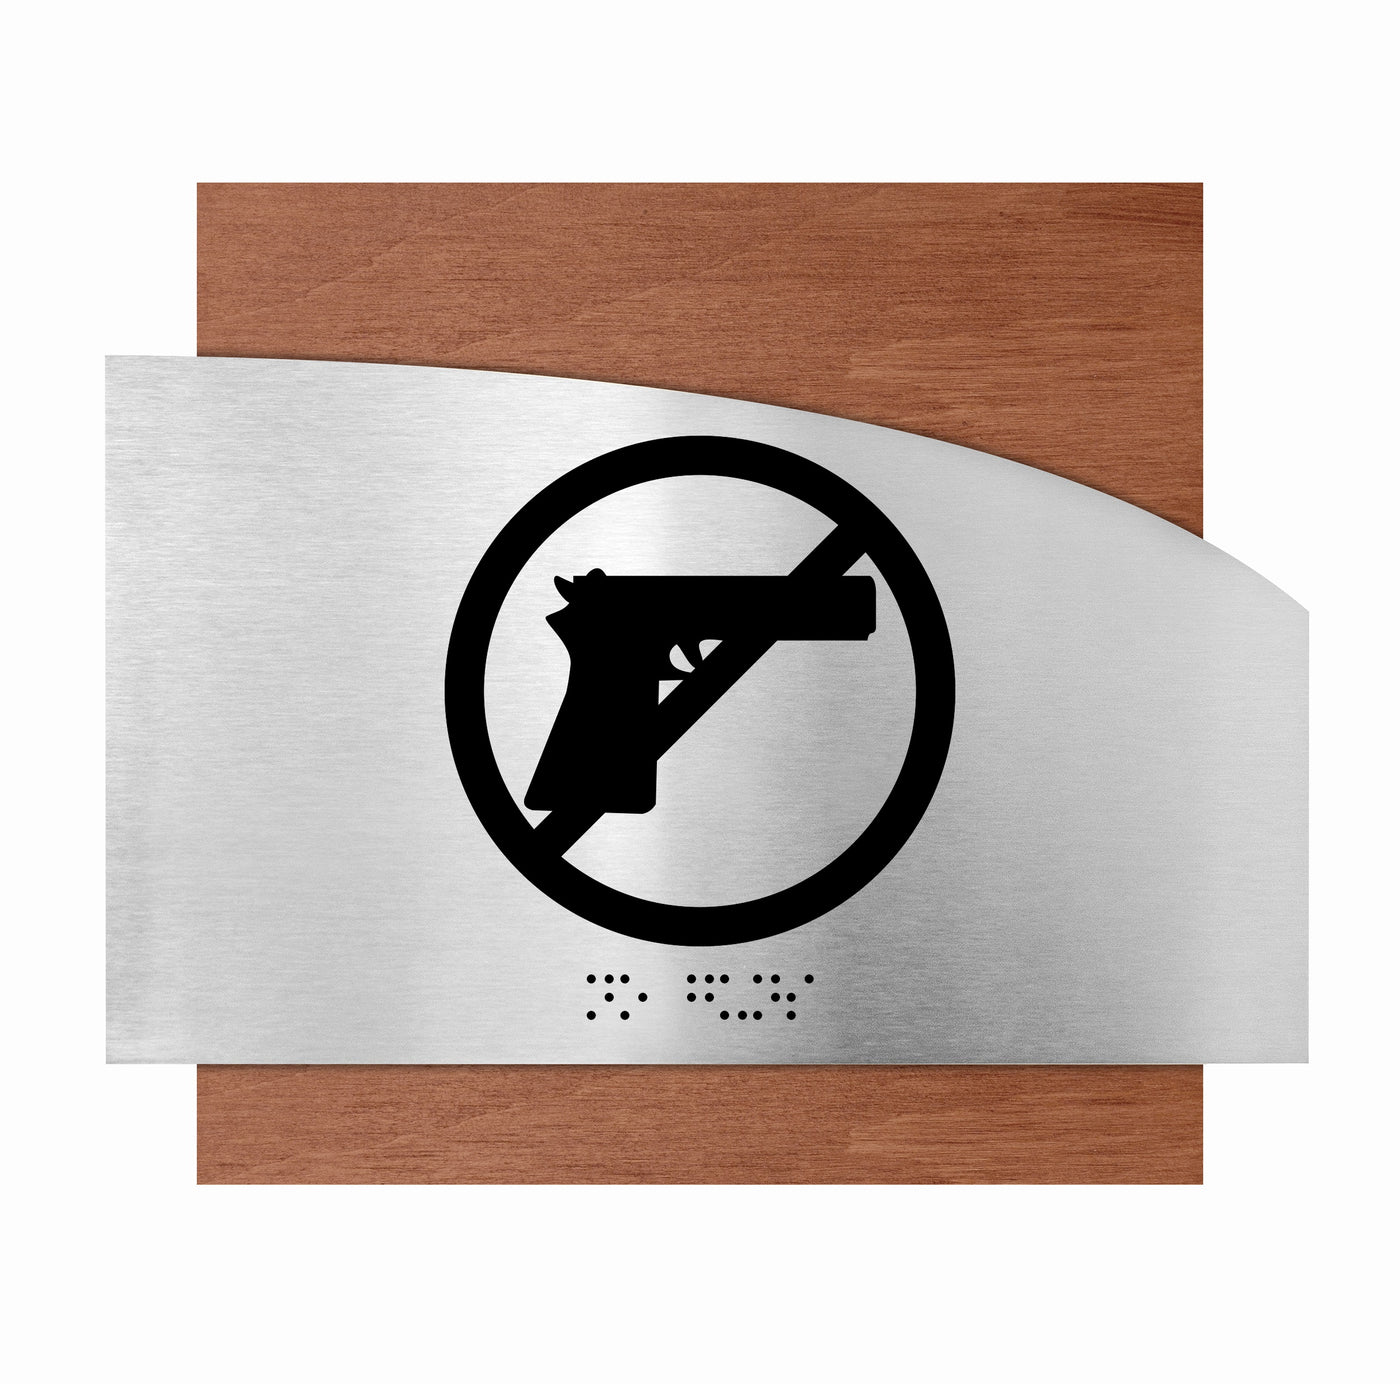 Information Signs - No Guns Sing Steel "Wave" Design